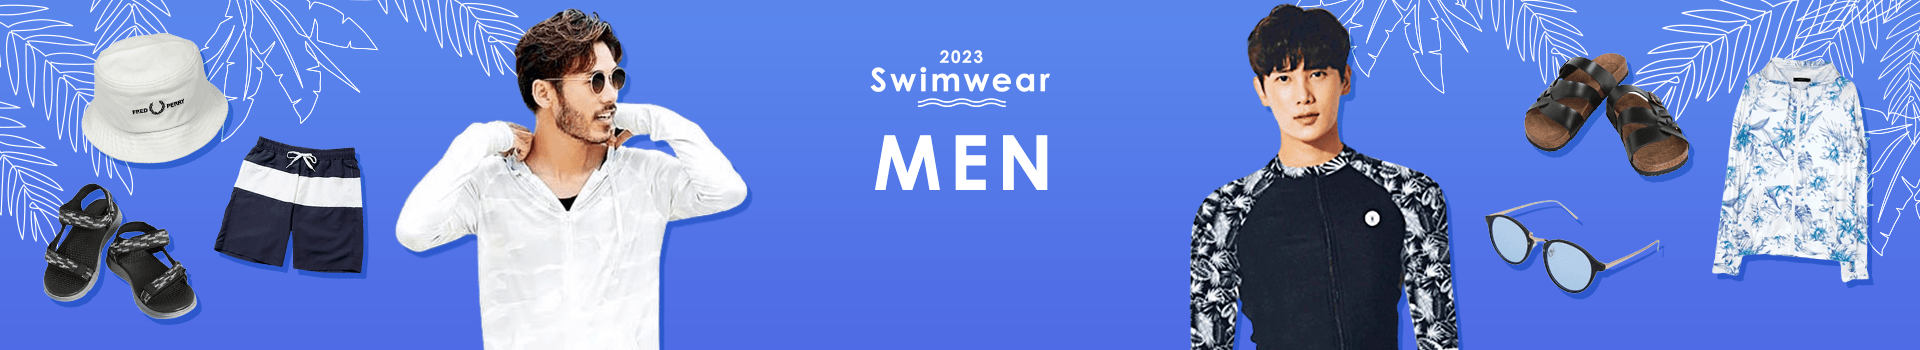 MEN 2023 Swimwear